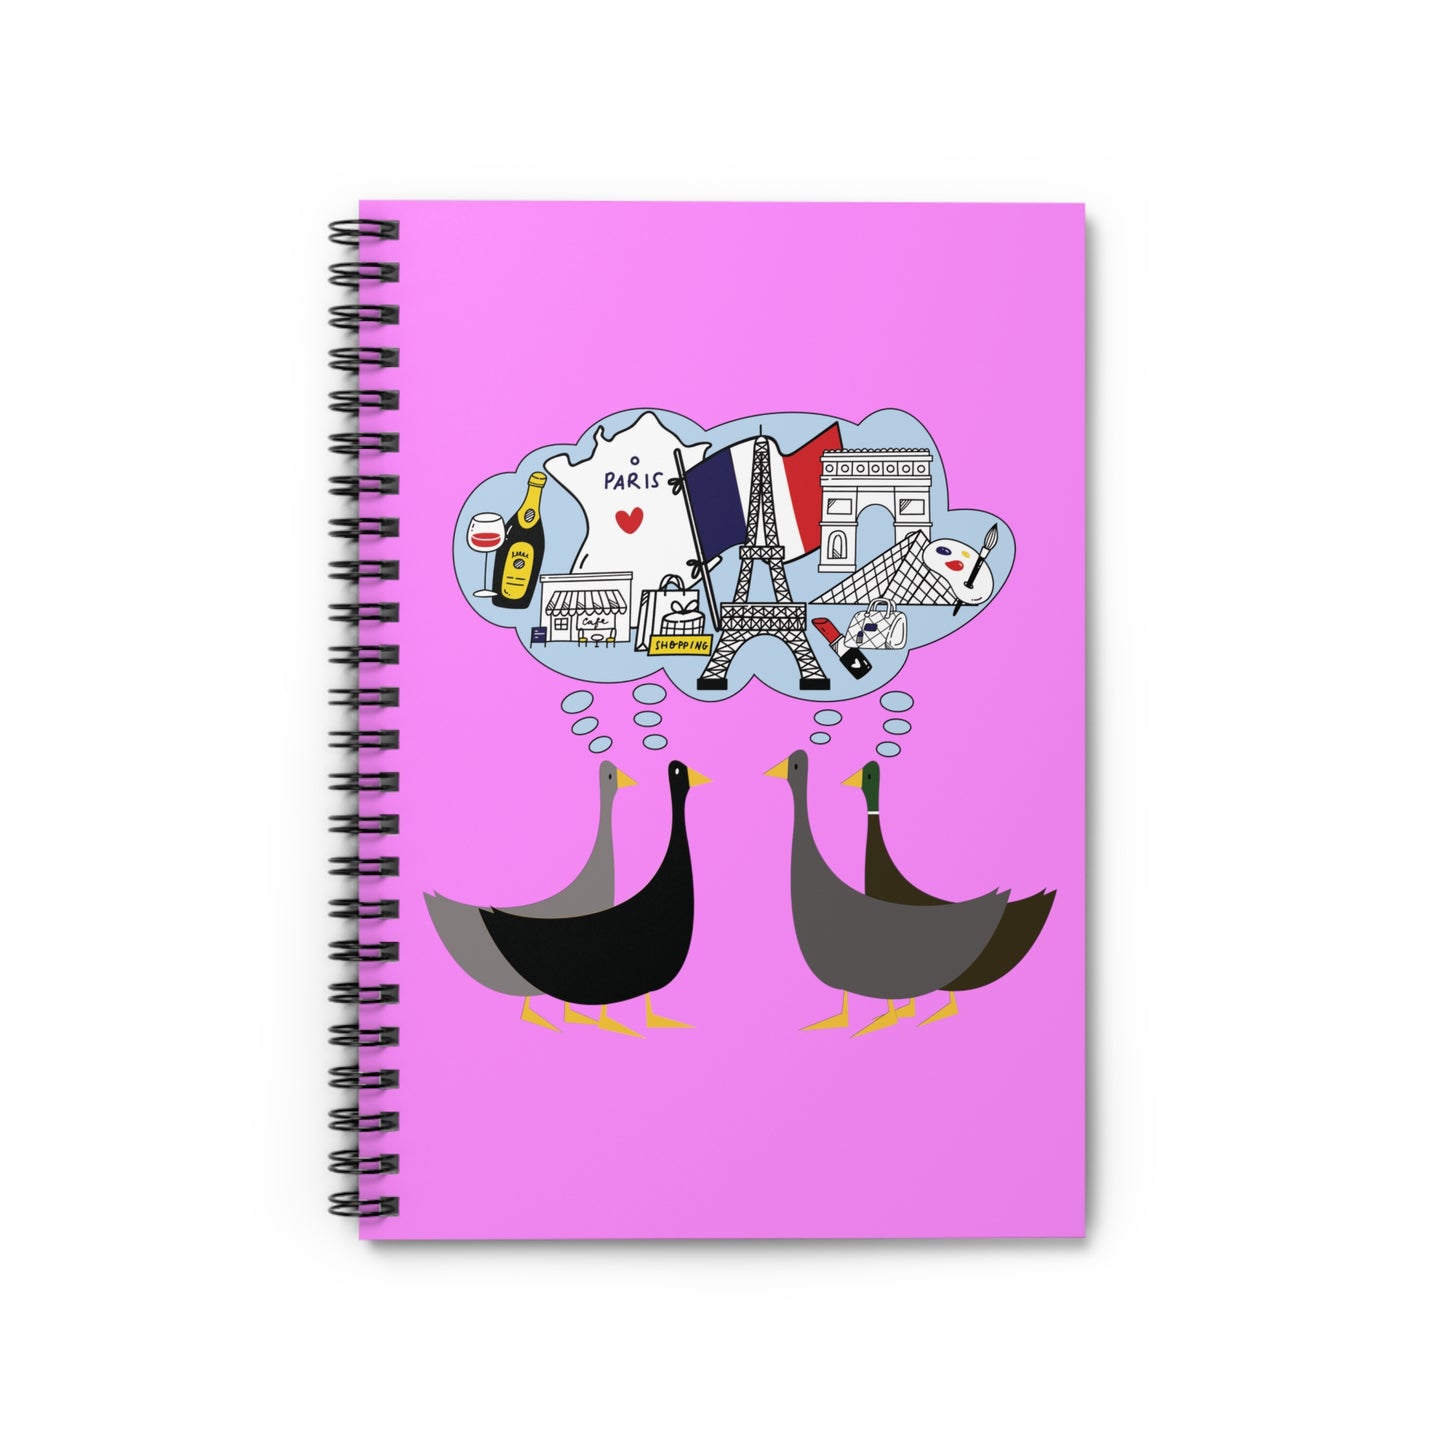 Ducks dreaming of Paris - Fuschia Pink ff8eff - Spiral Notebook - Ruled Line